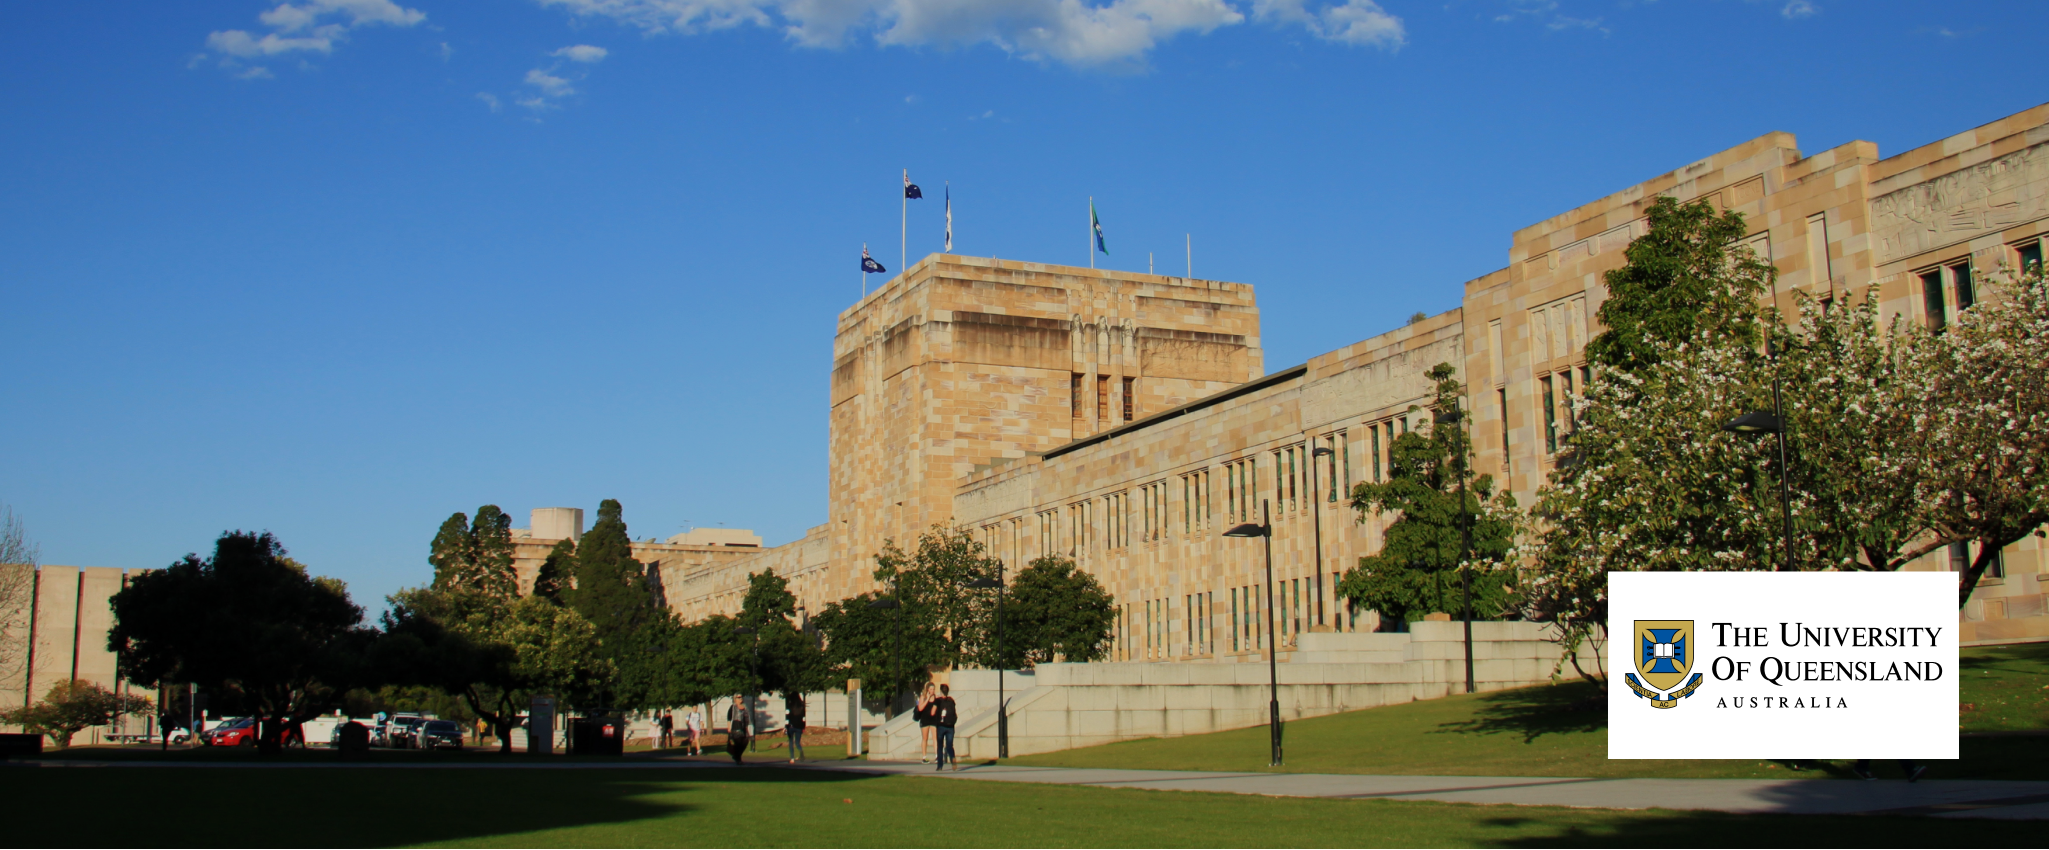 昆士蘭大學 The University of Queensland（UQ）